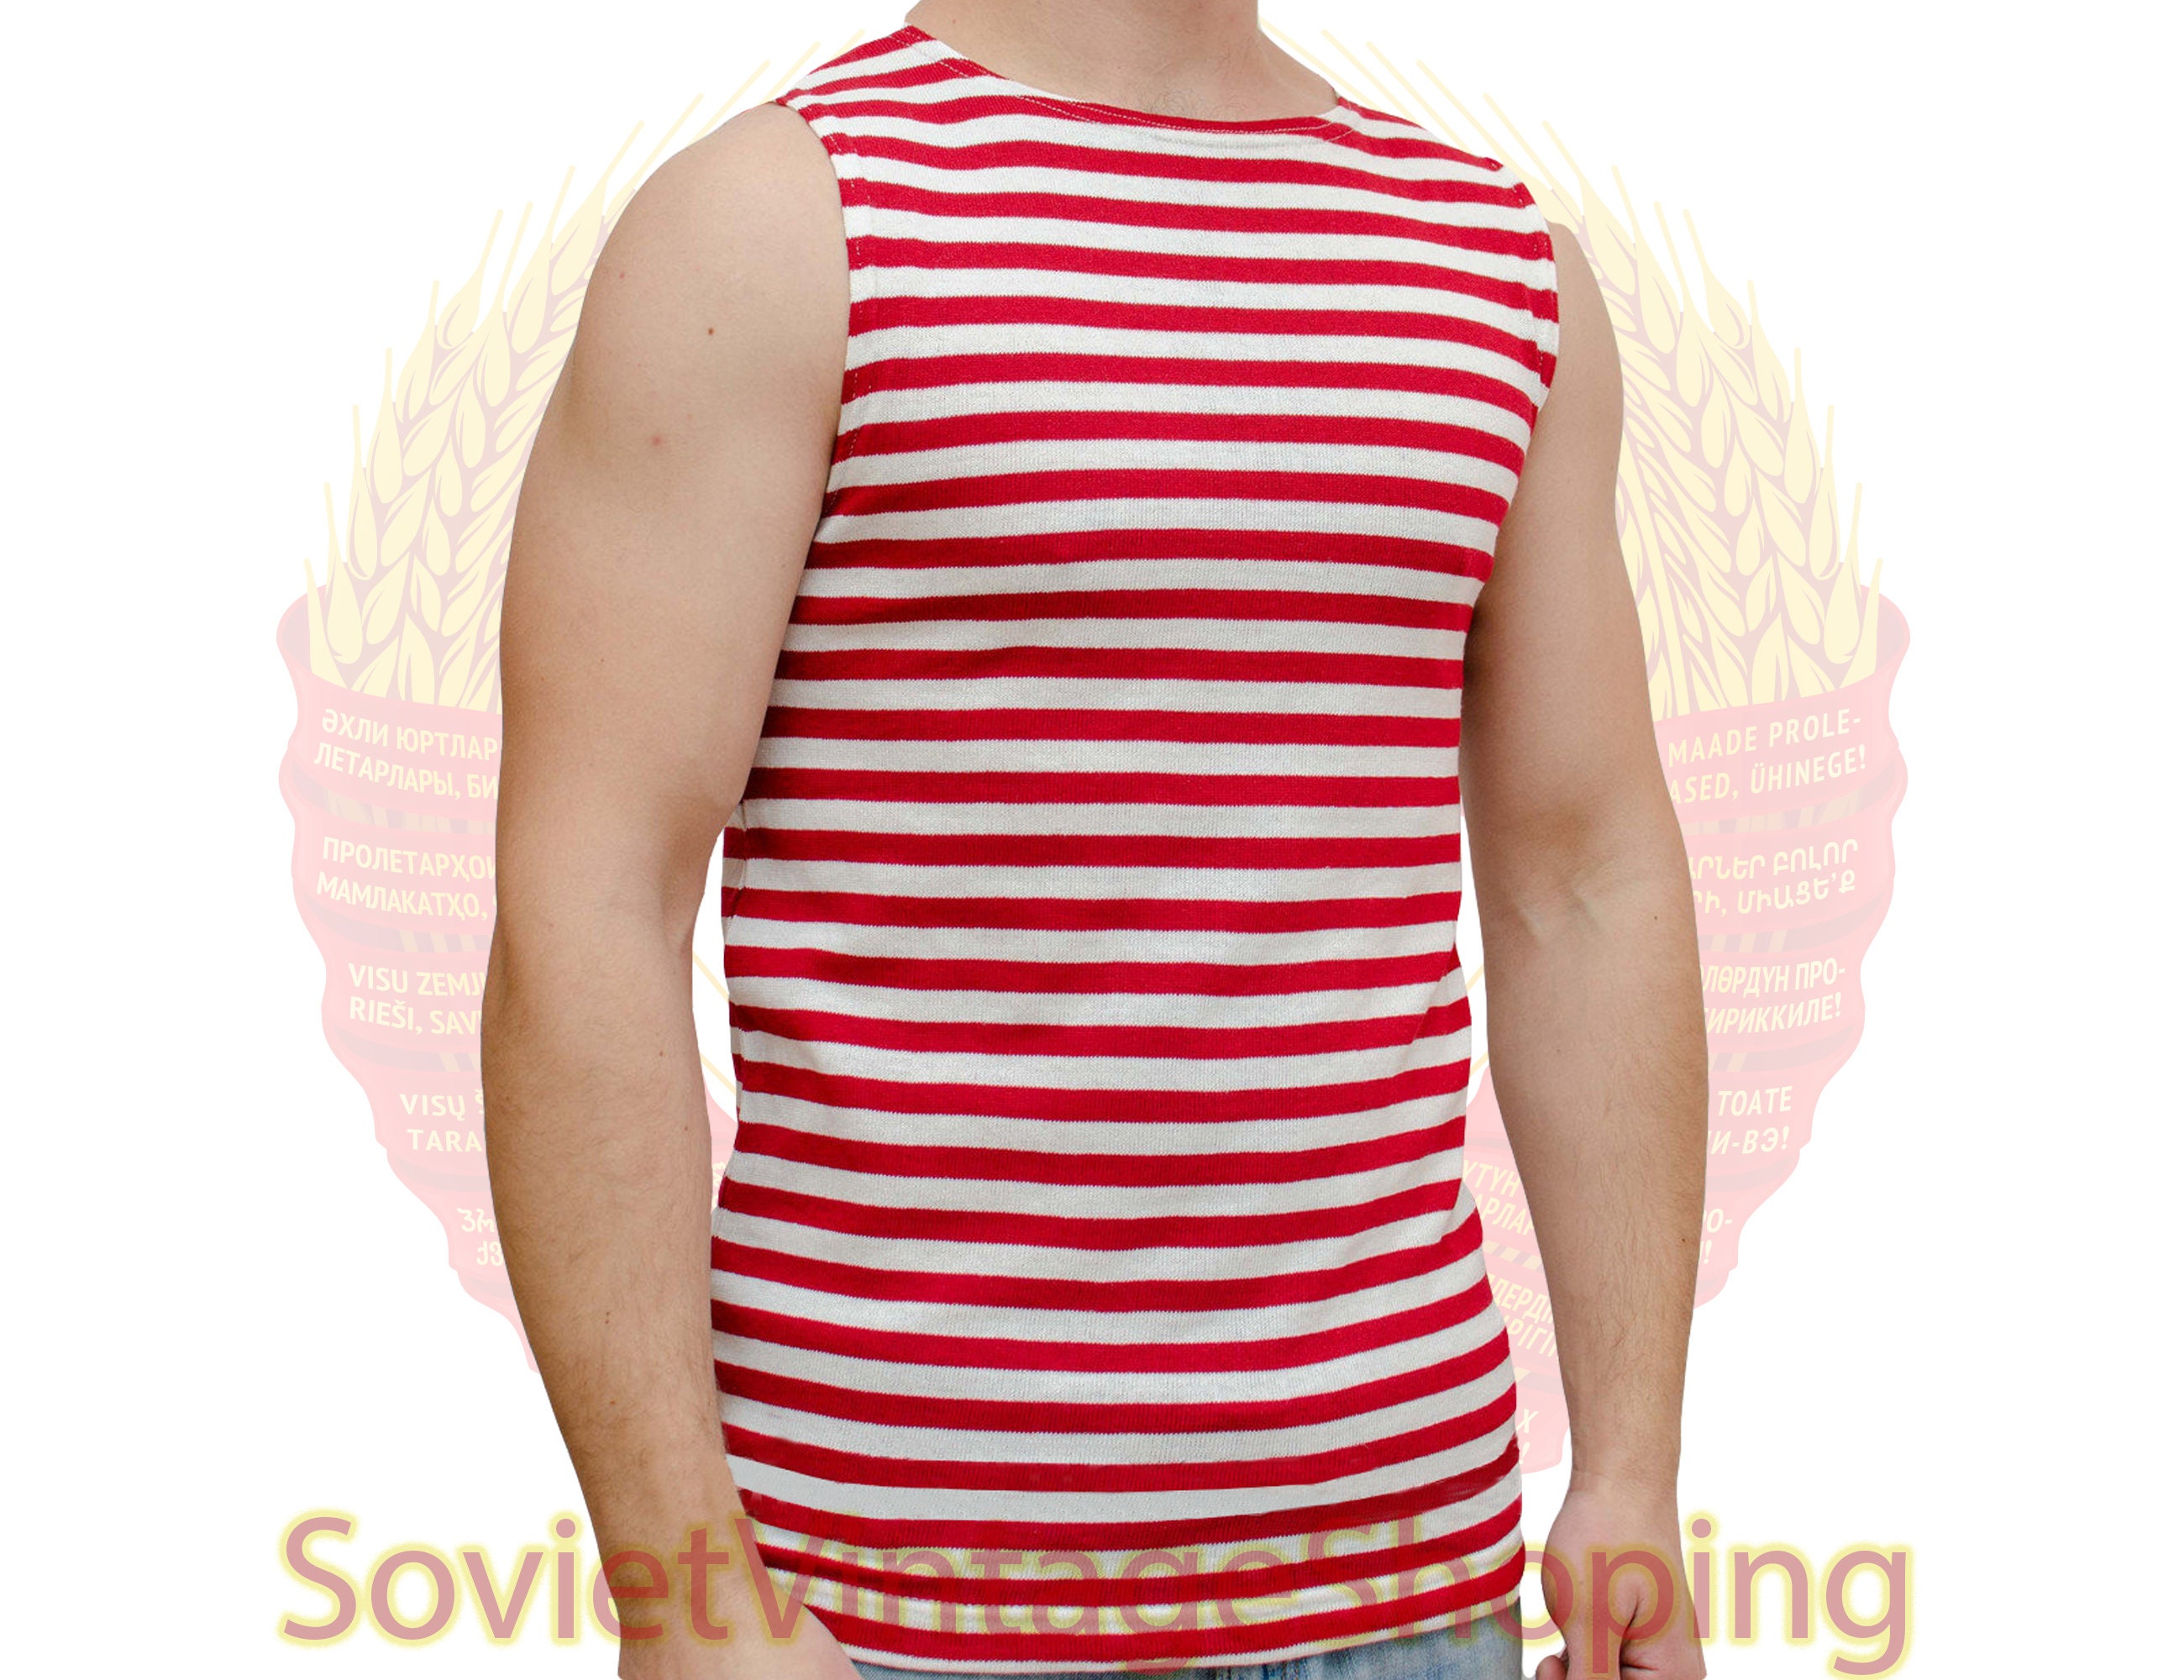 Soviet Army SPETSNAZ stripped sleeveless t-shirt Russian | Etsy